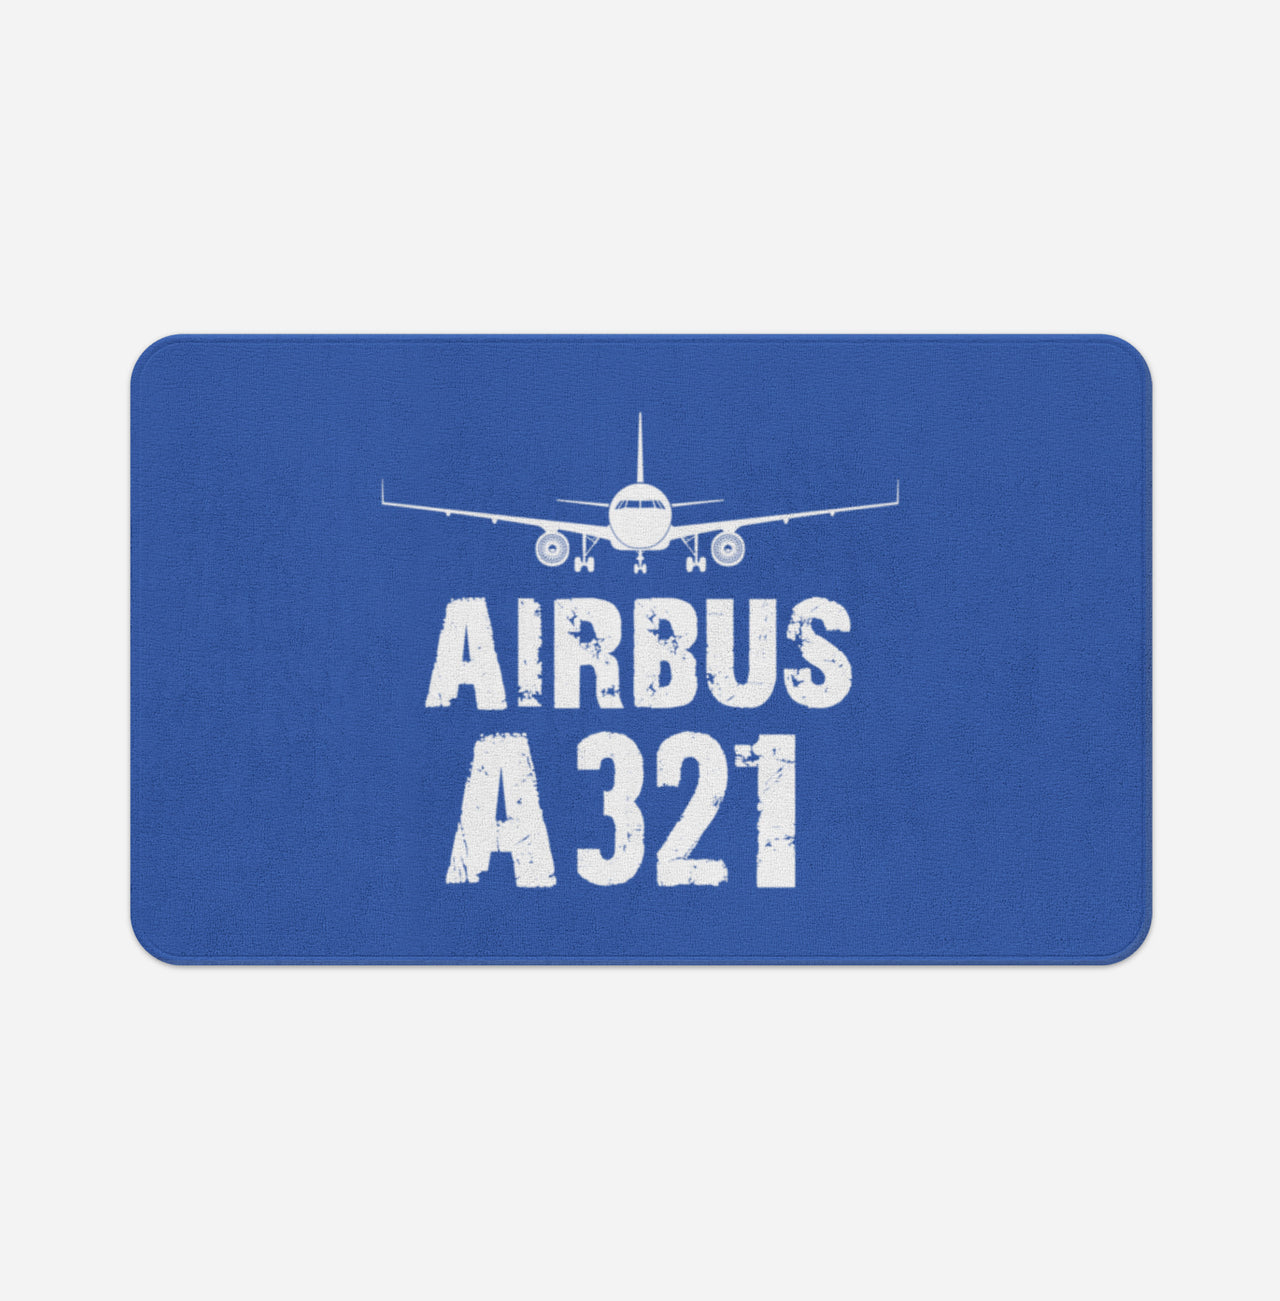 Airbus A321 & Plane Designed Bath Mats